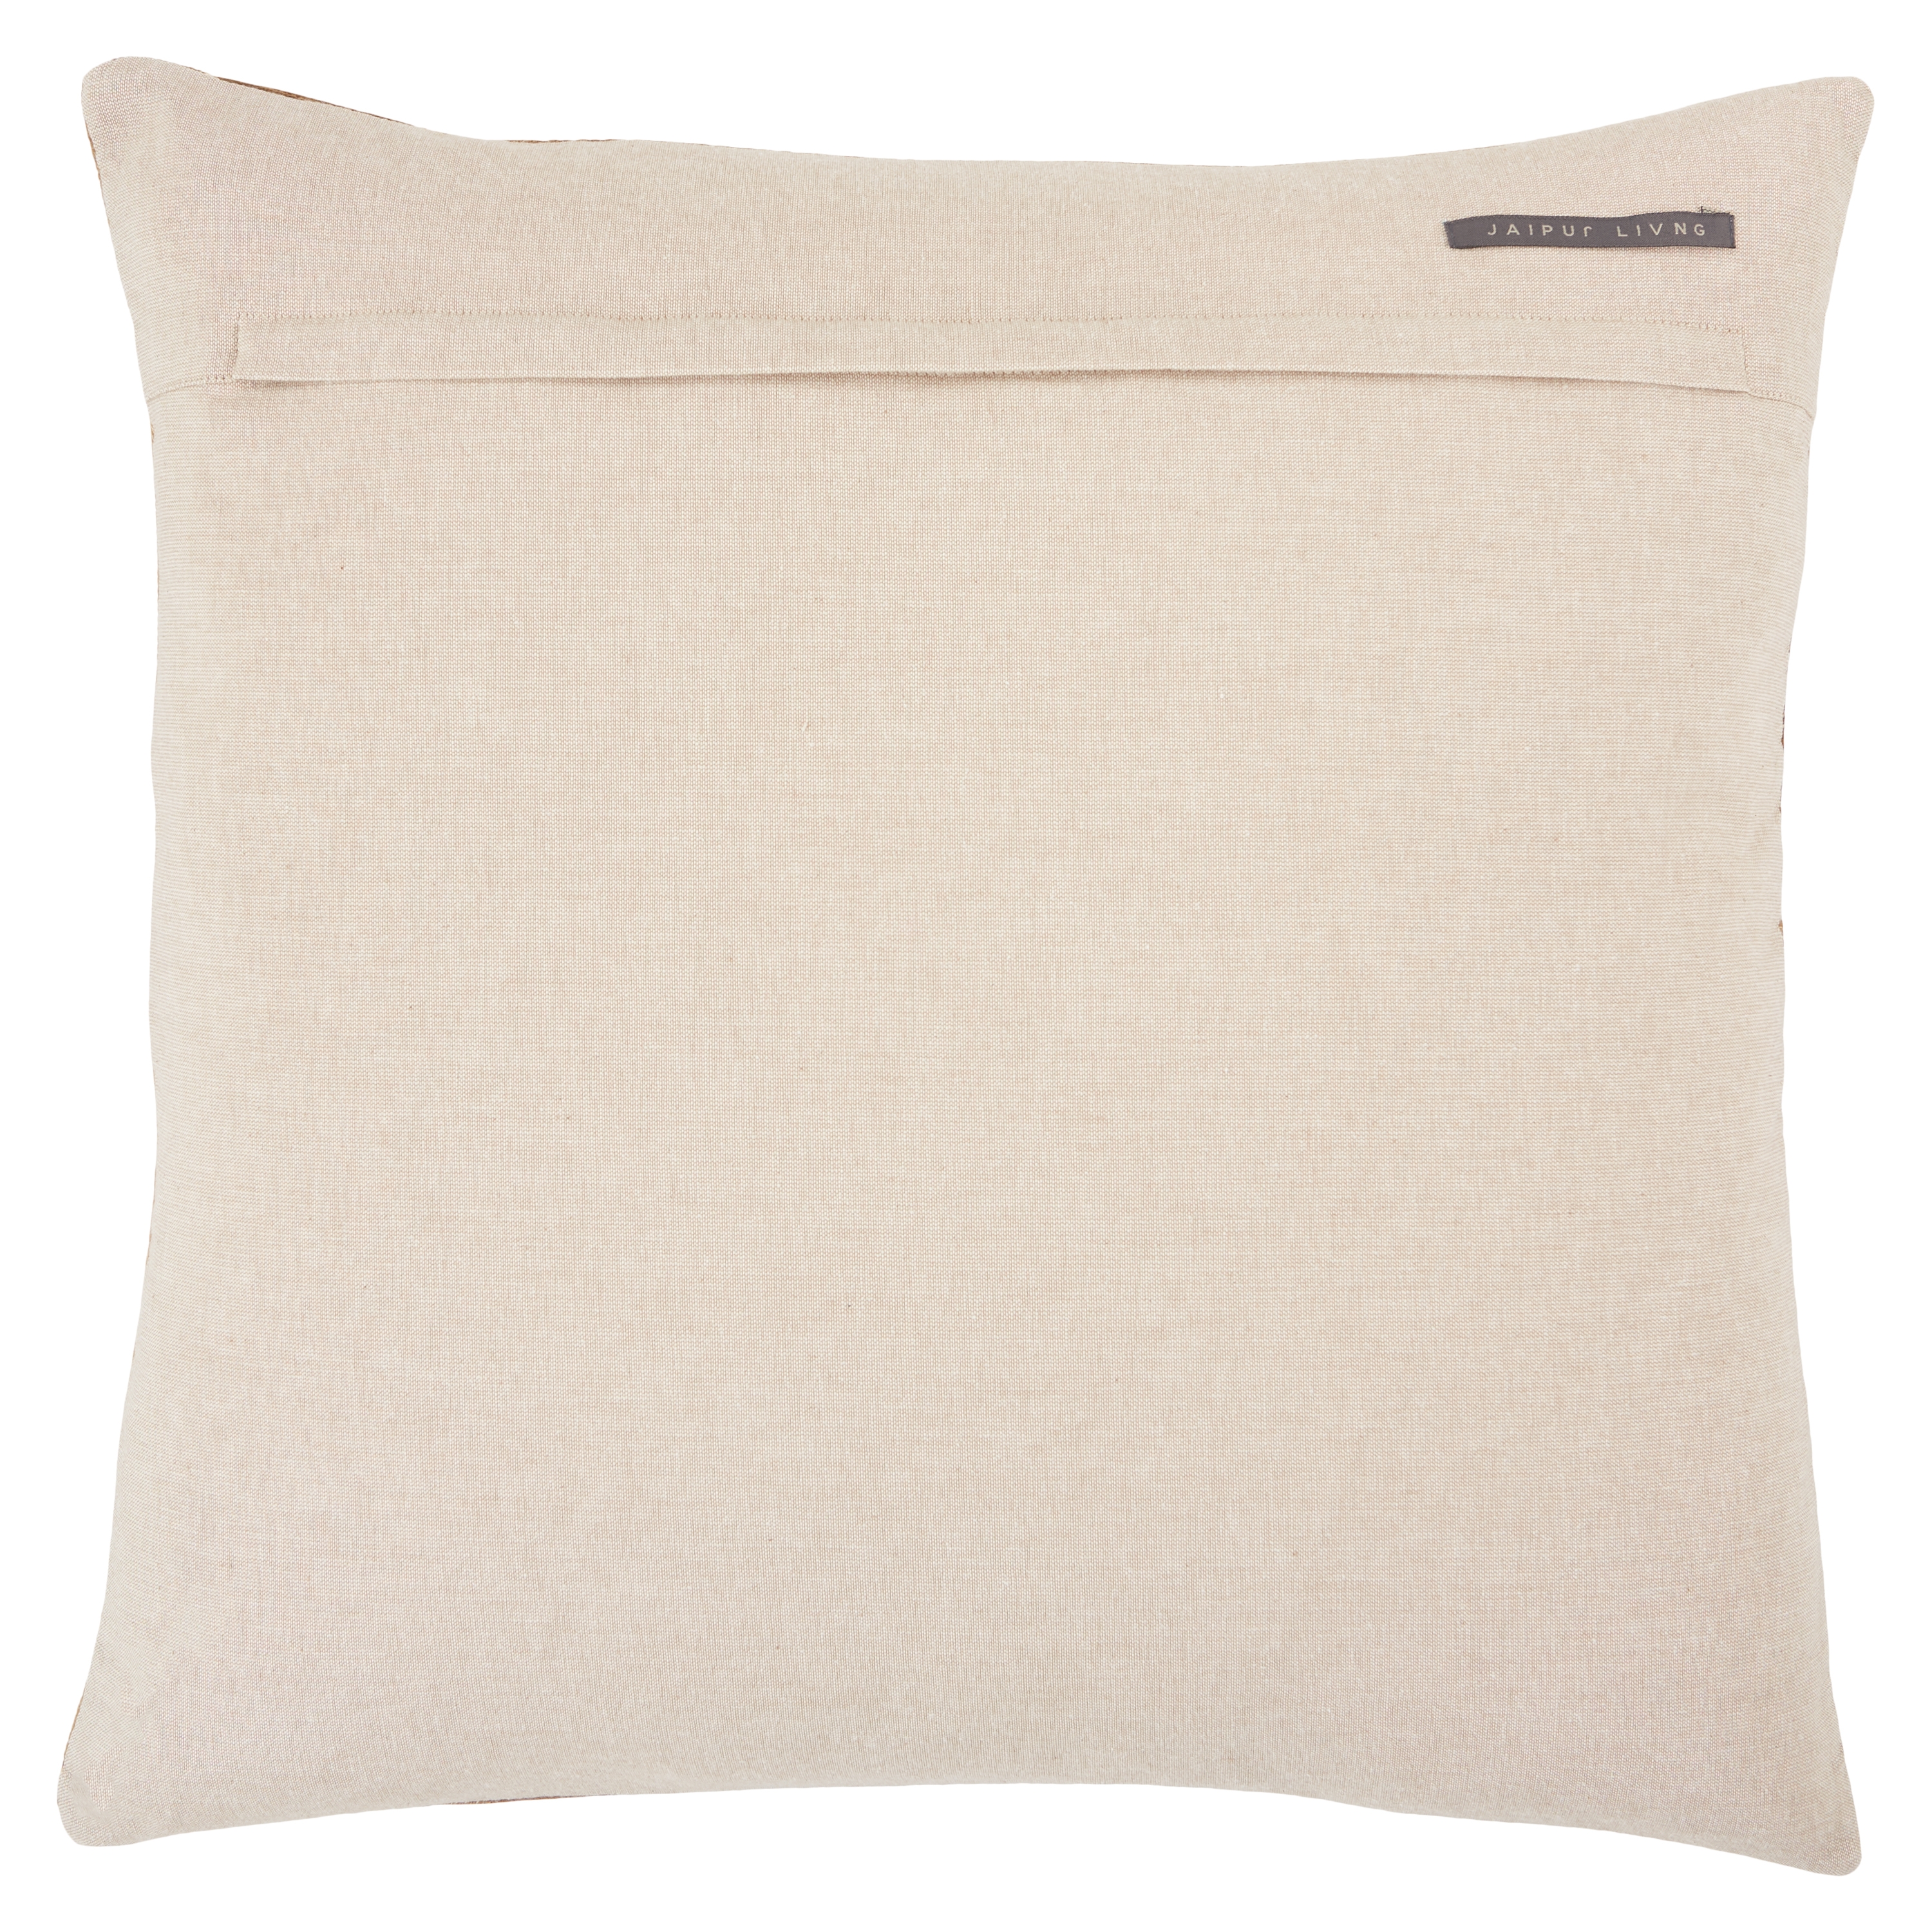 Design (US) Brown 22"X22" Pillow - Image 1